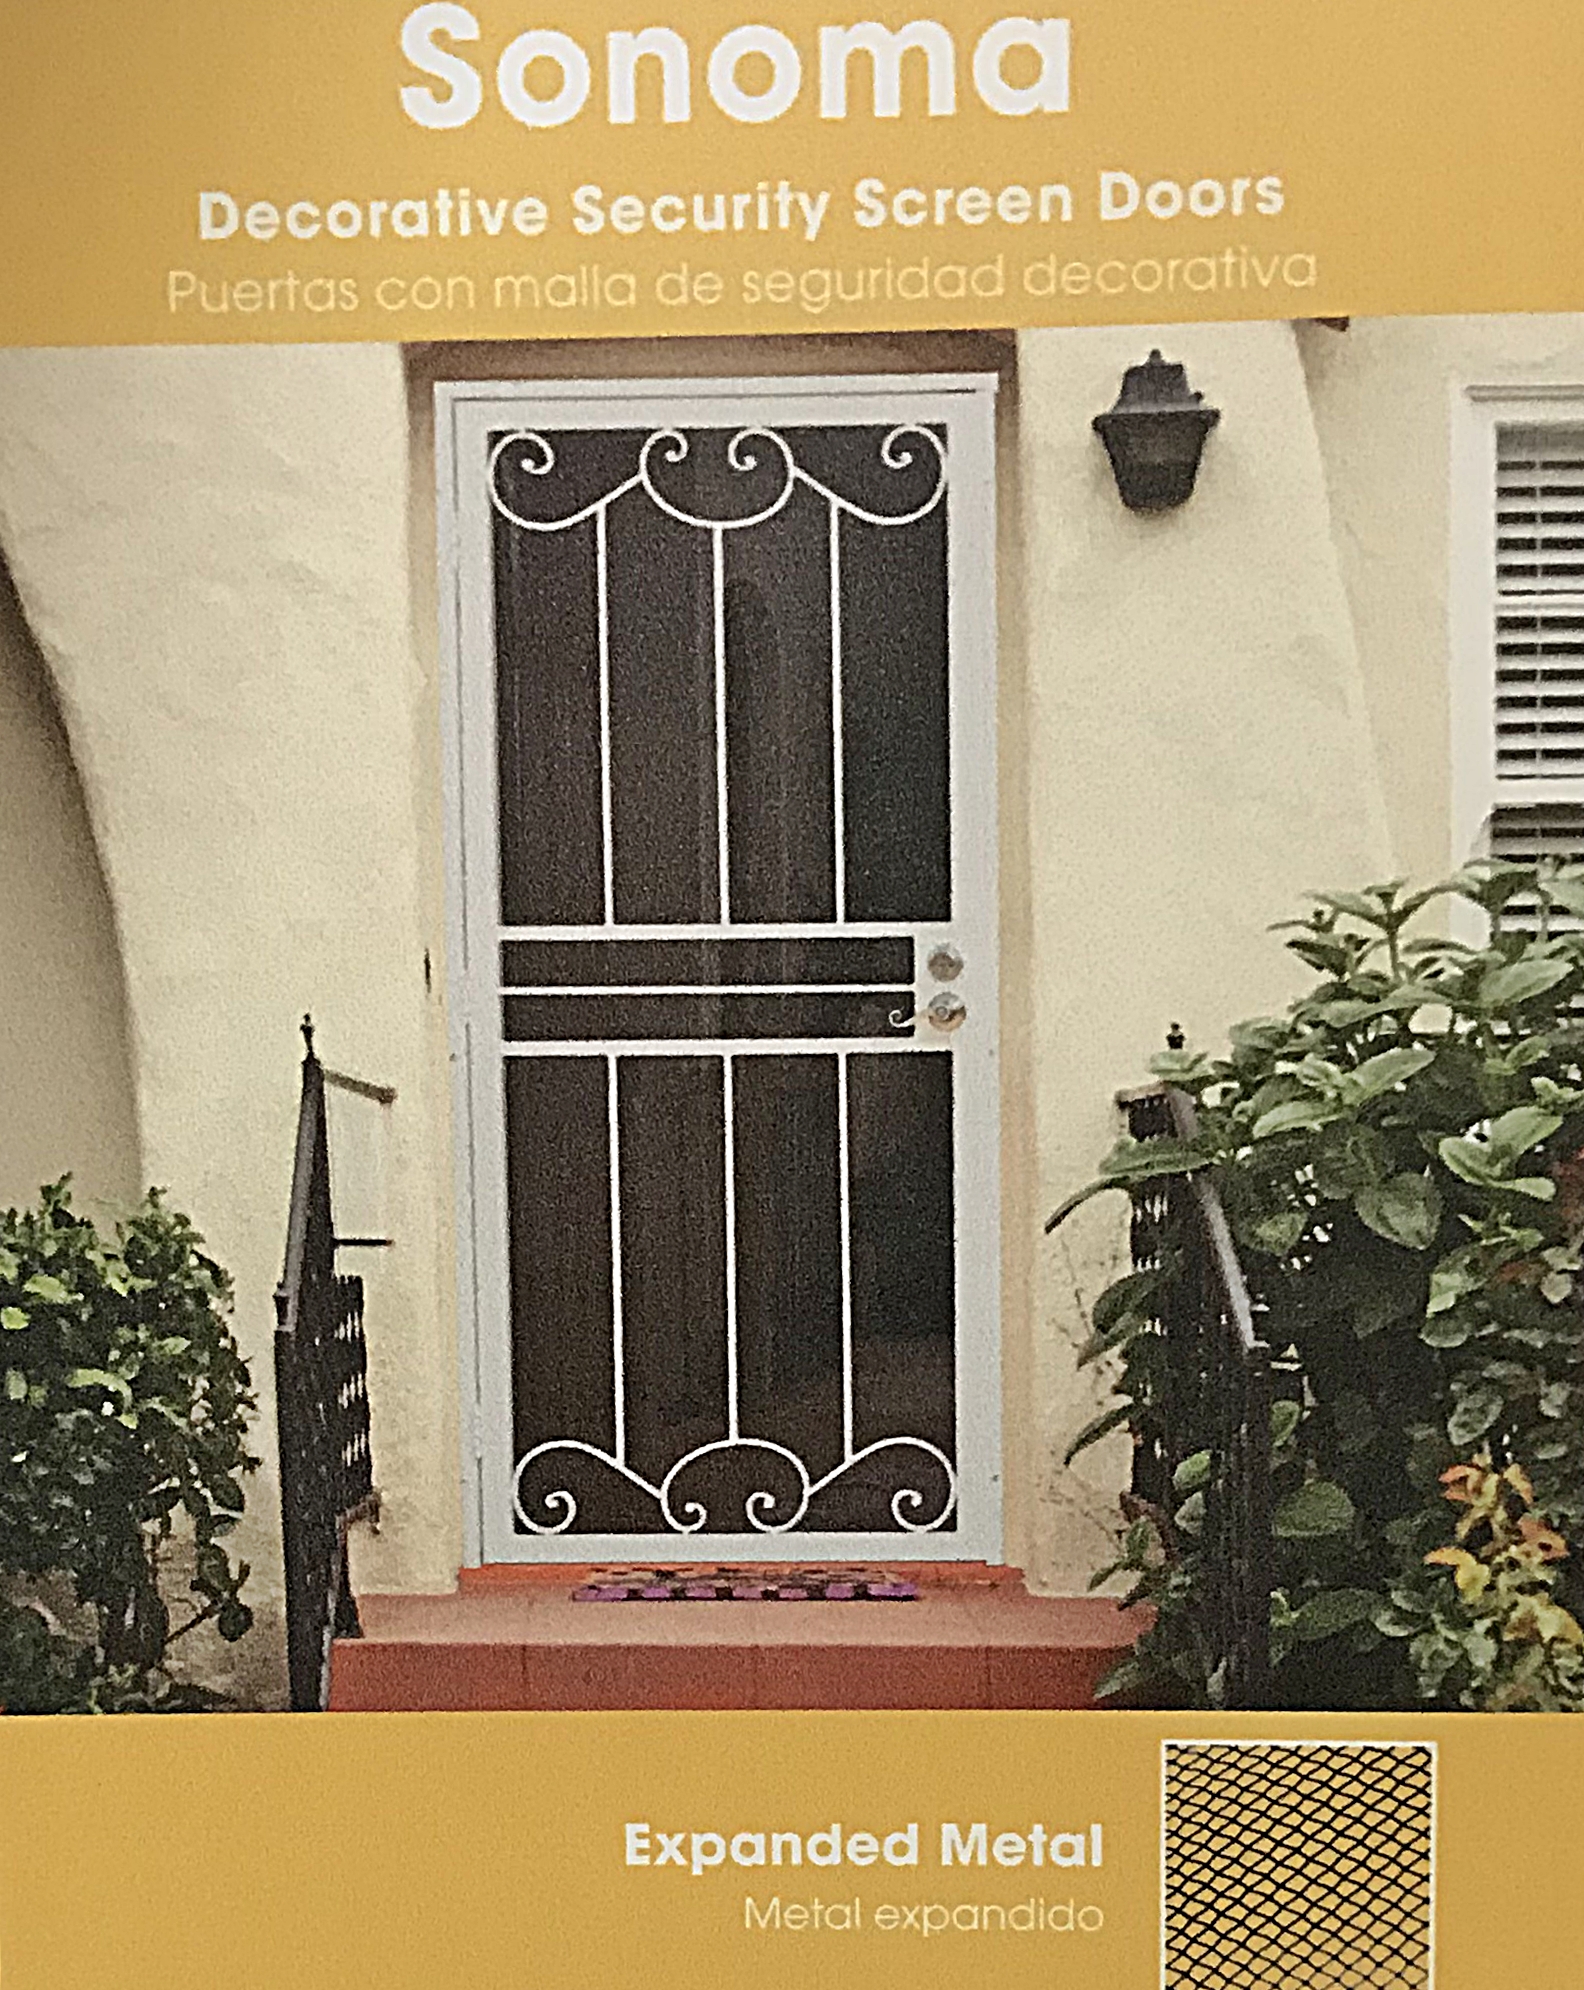 Decorative Security Screen Door Sonoma